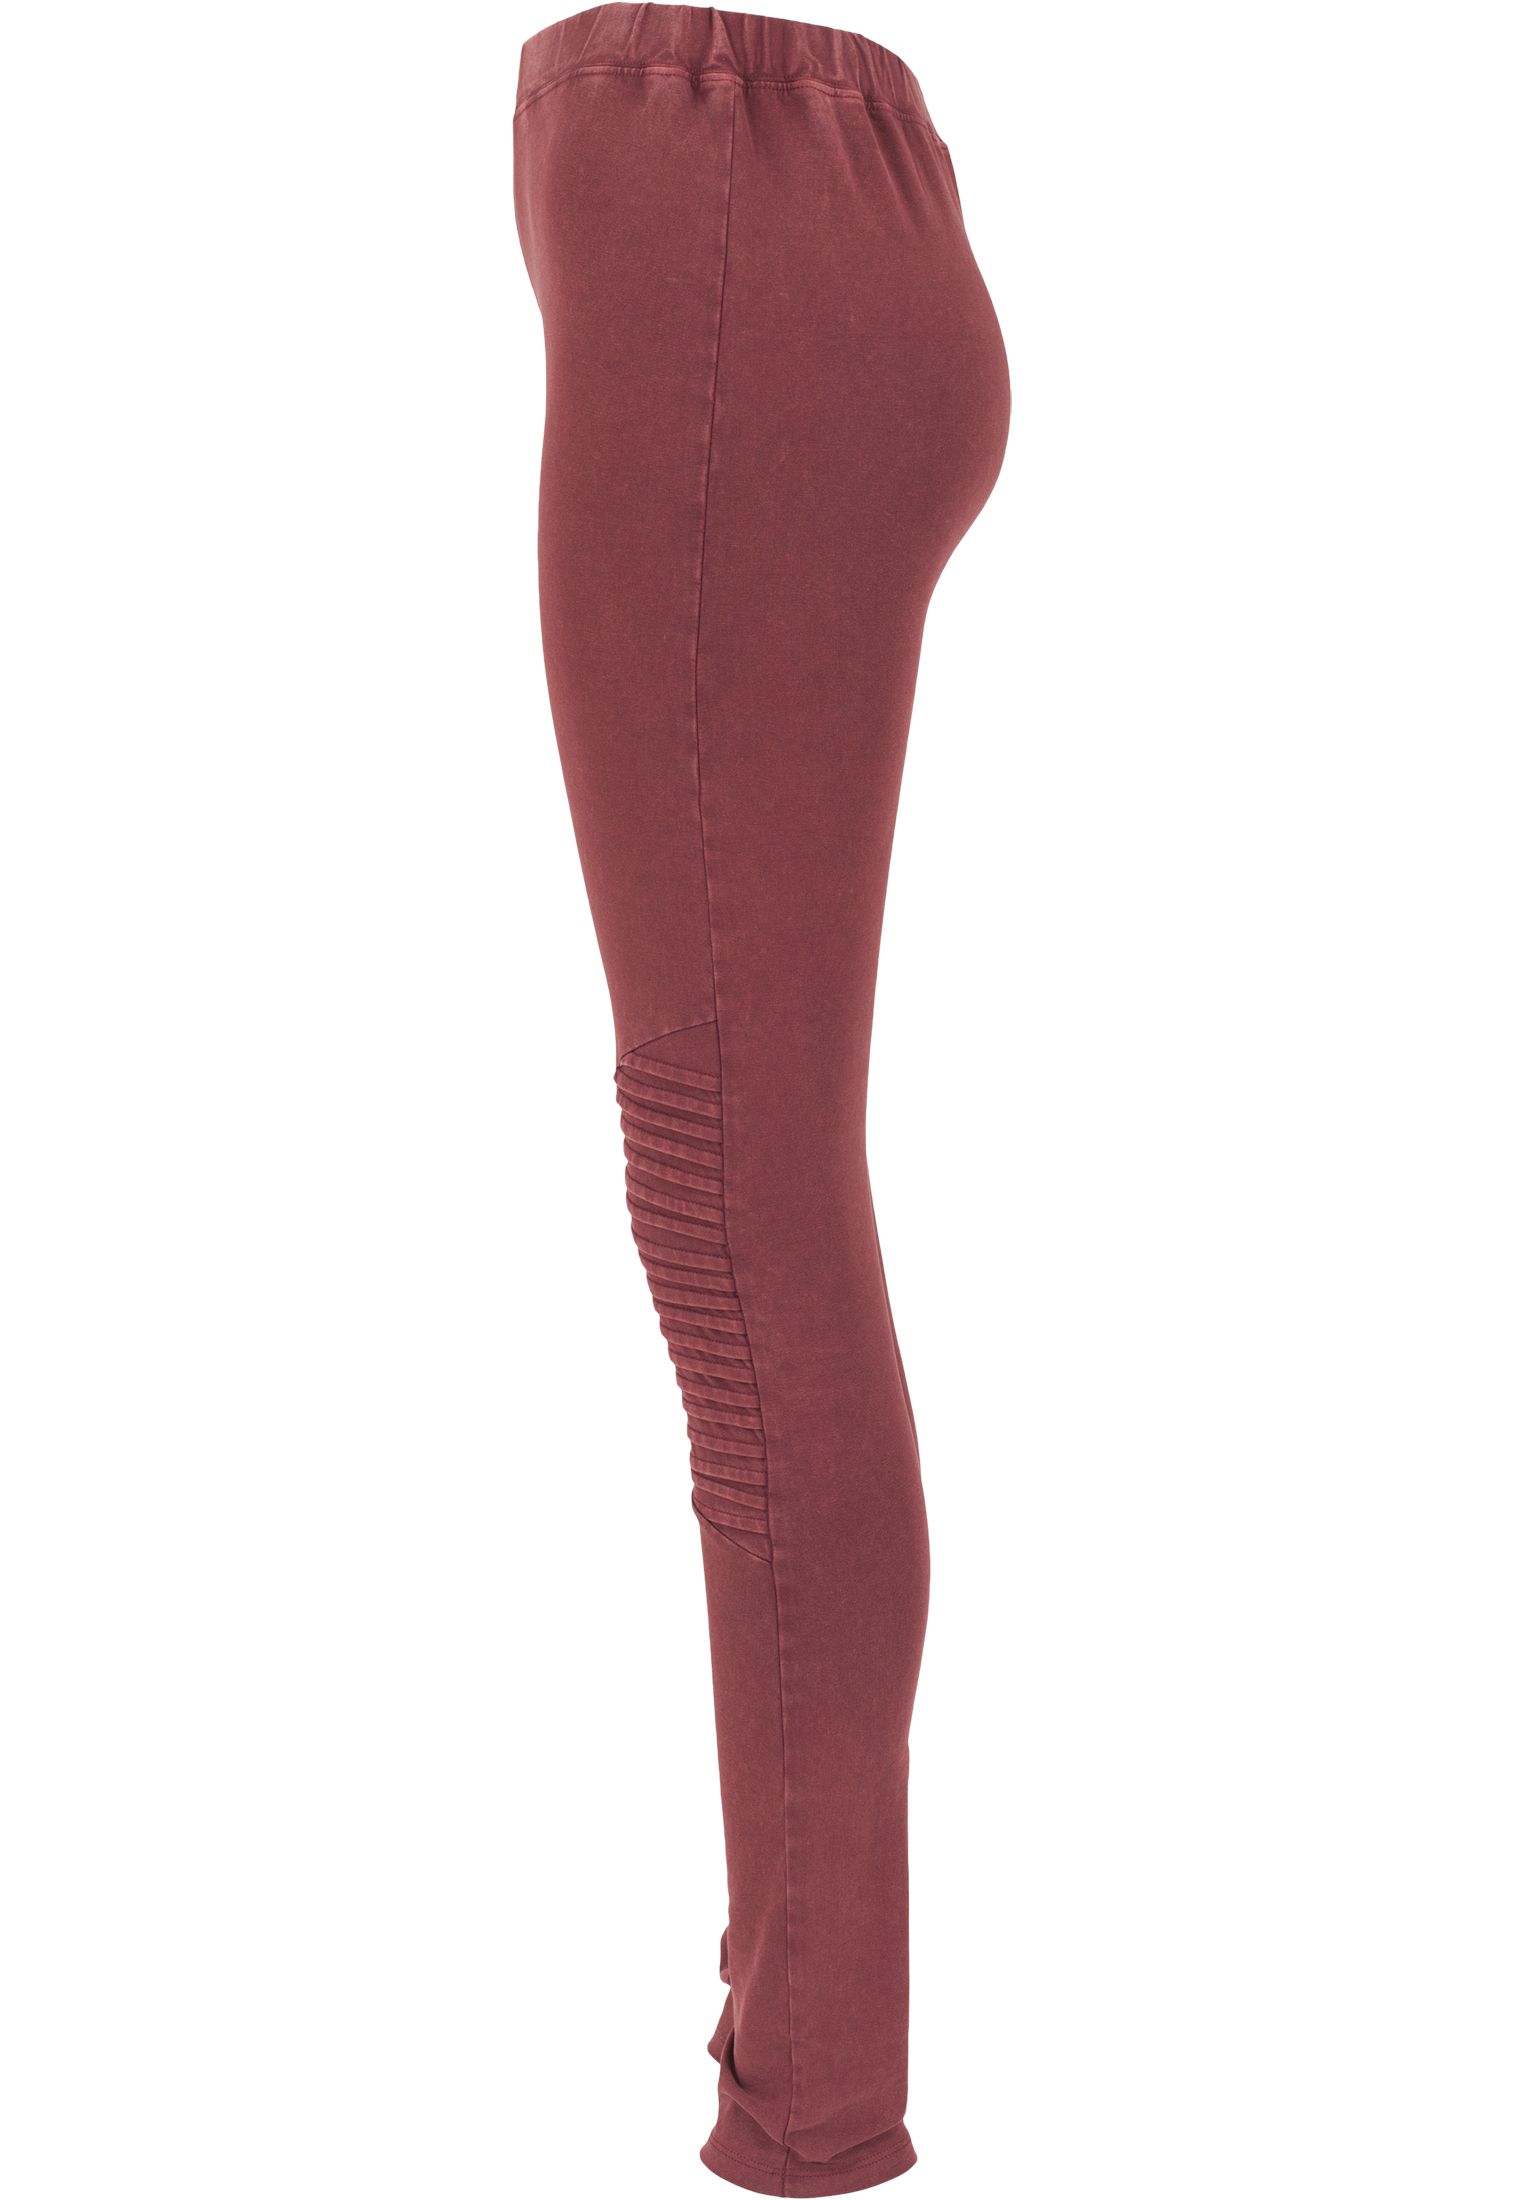 Curvy Ladies Denim Jersey Leggings in Farbe burgundy